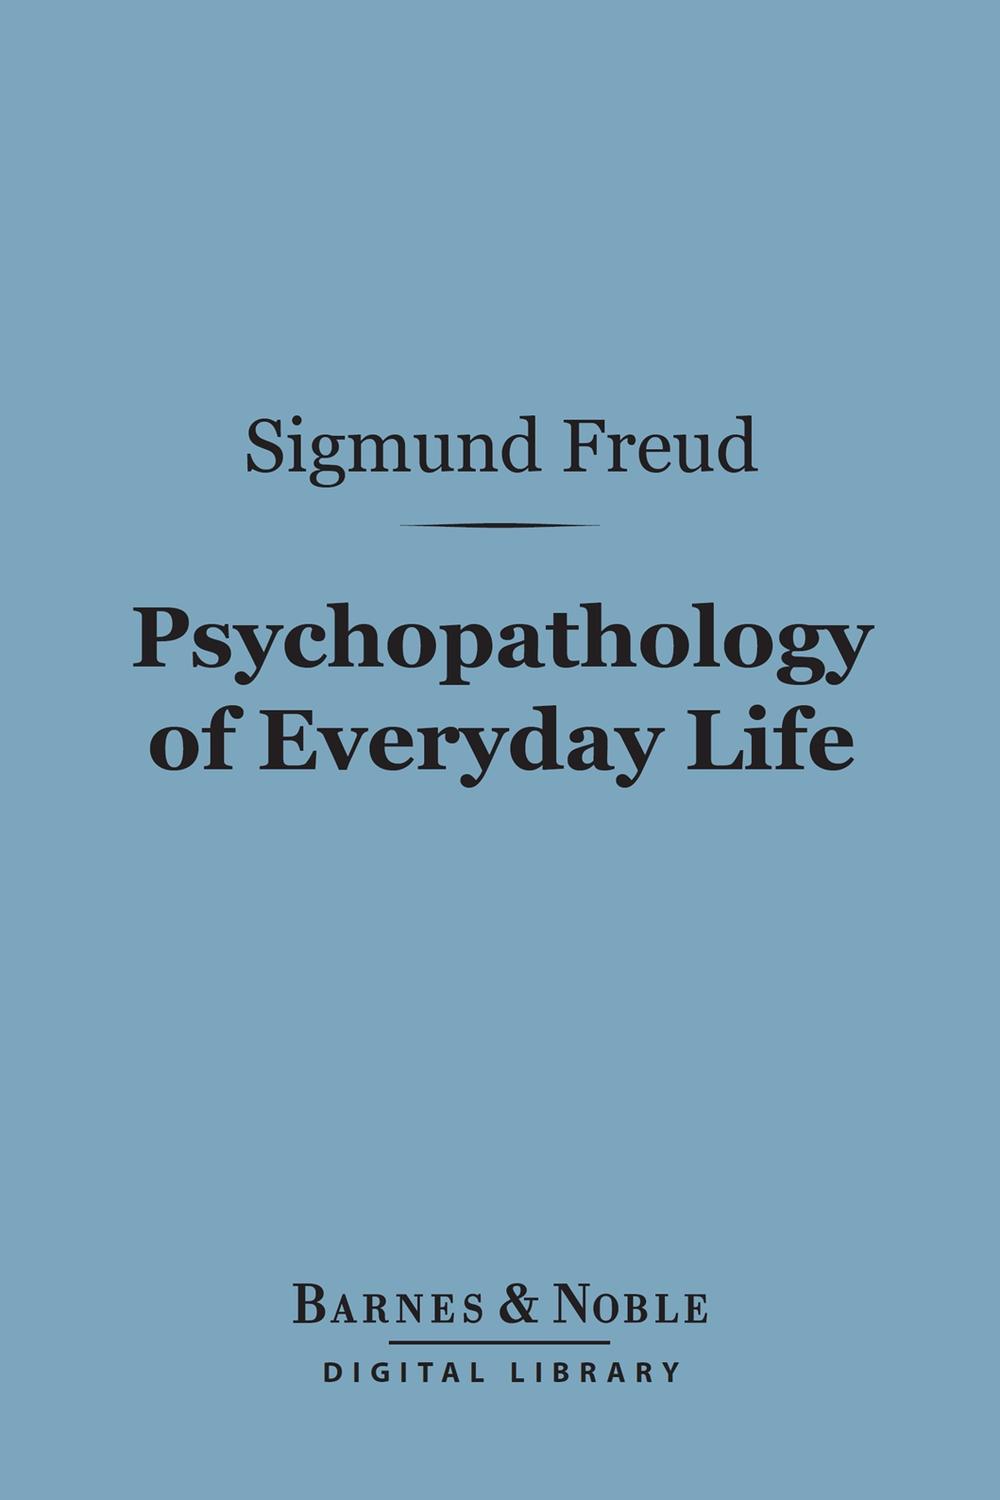 Psychopathology of Everyday Life (Barnes & Noble Digital Library) - Sigmund Freud